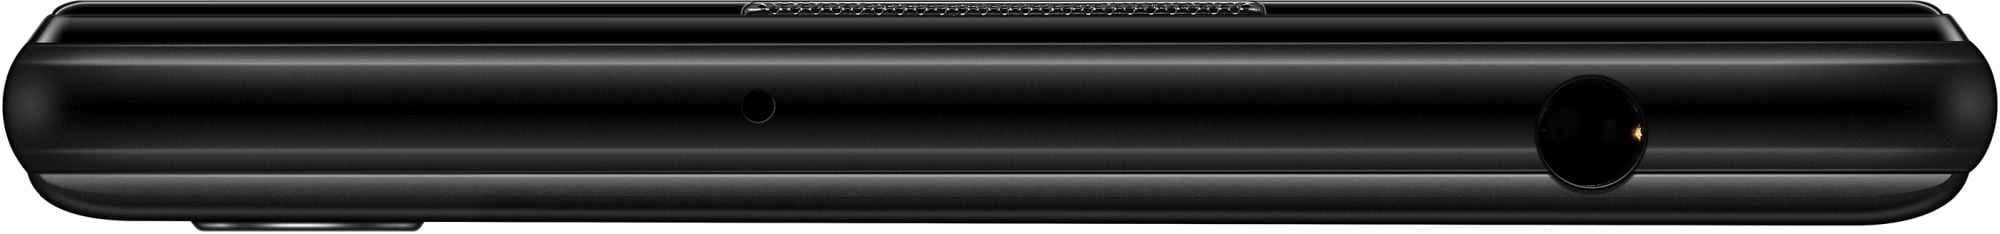 Huawei Honor 8A Prime 64GB Black